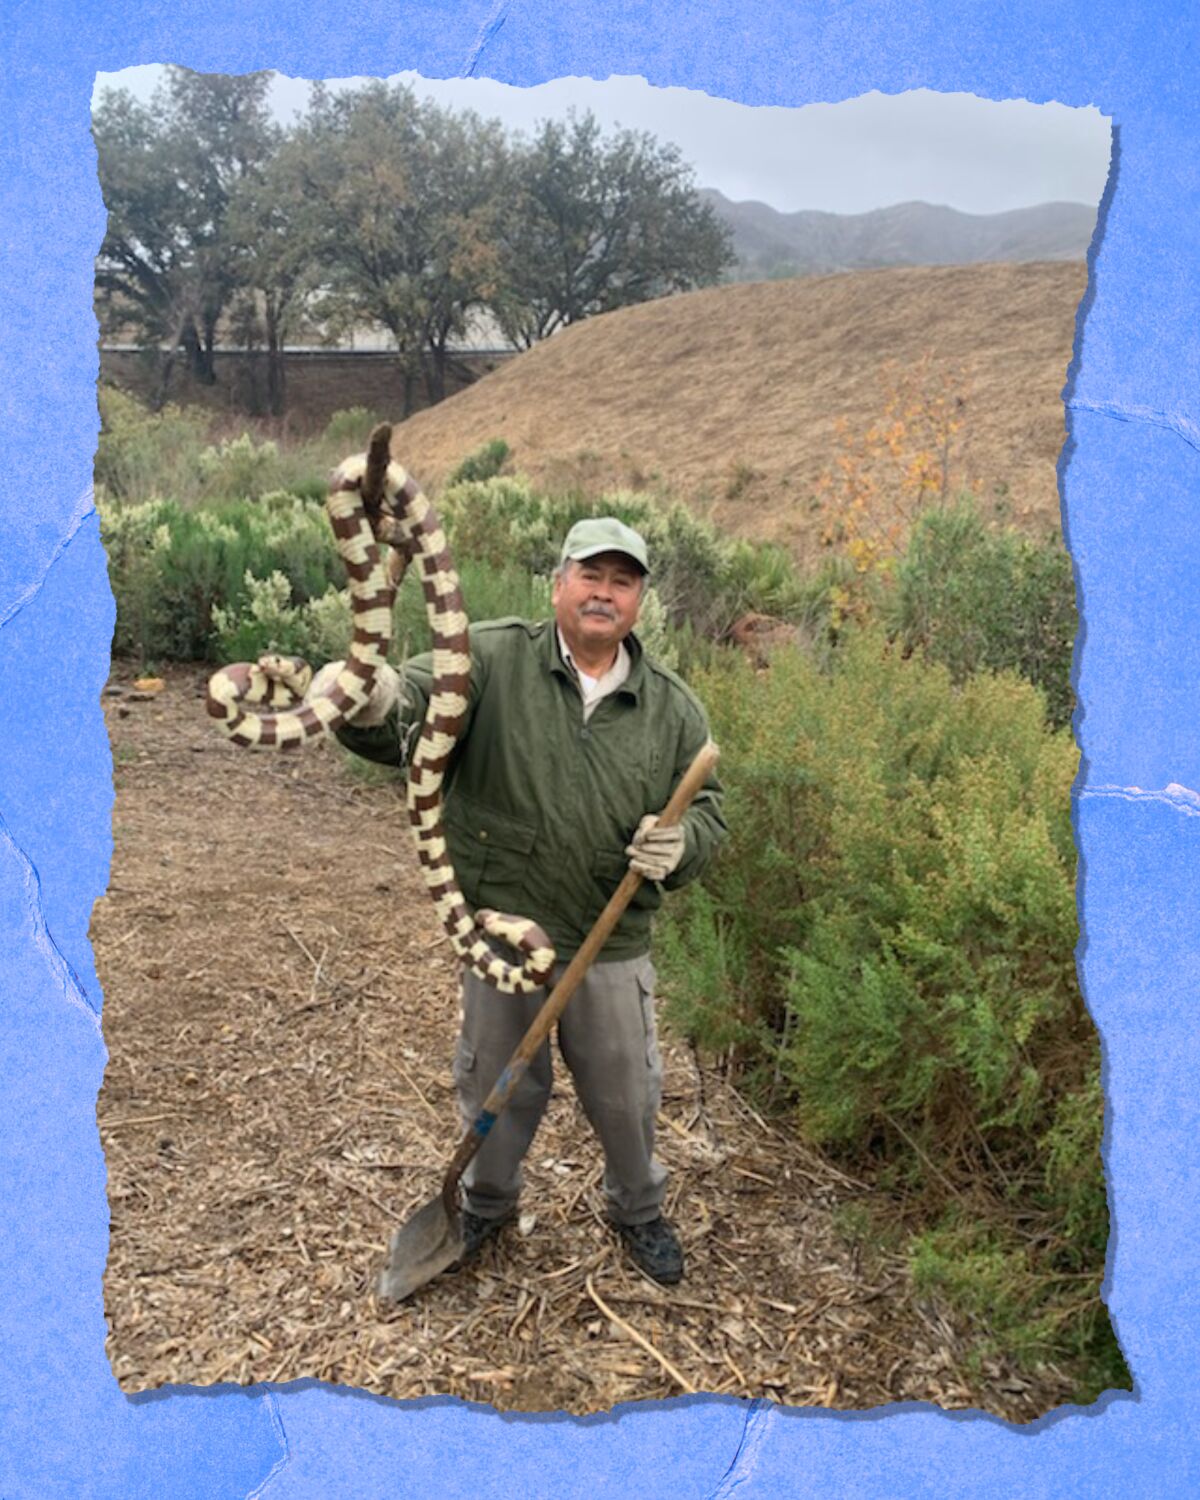 A man hoists a king snake using a shovel handle.